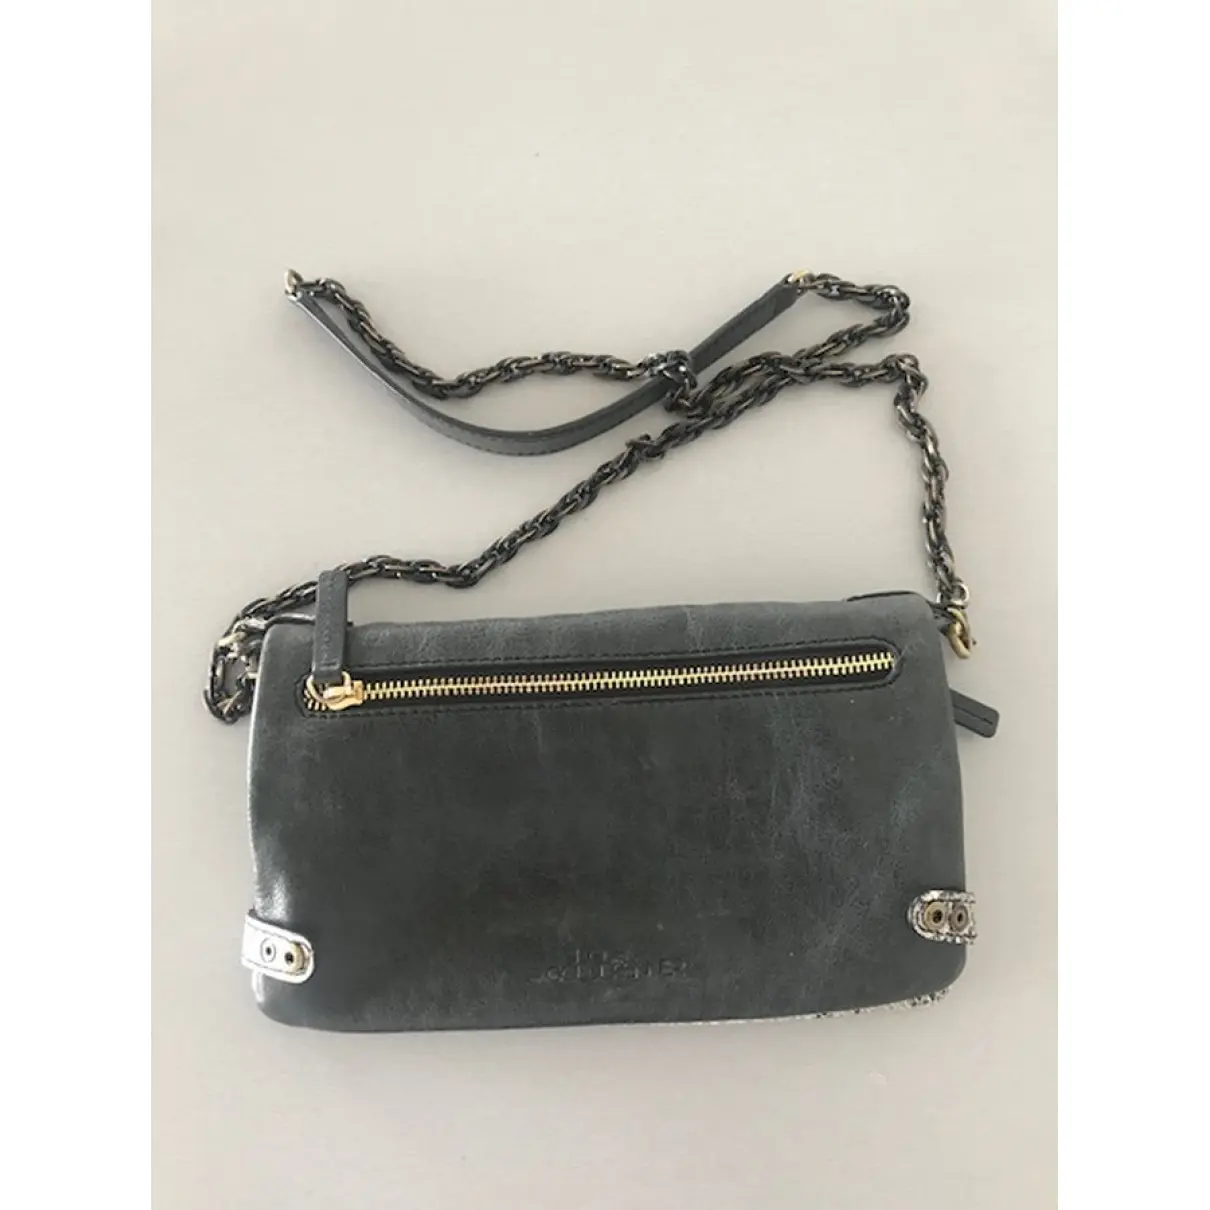 Leather handbag CLIO GOLDBRENNER